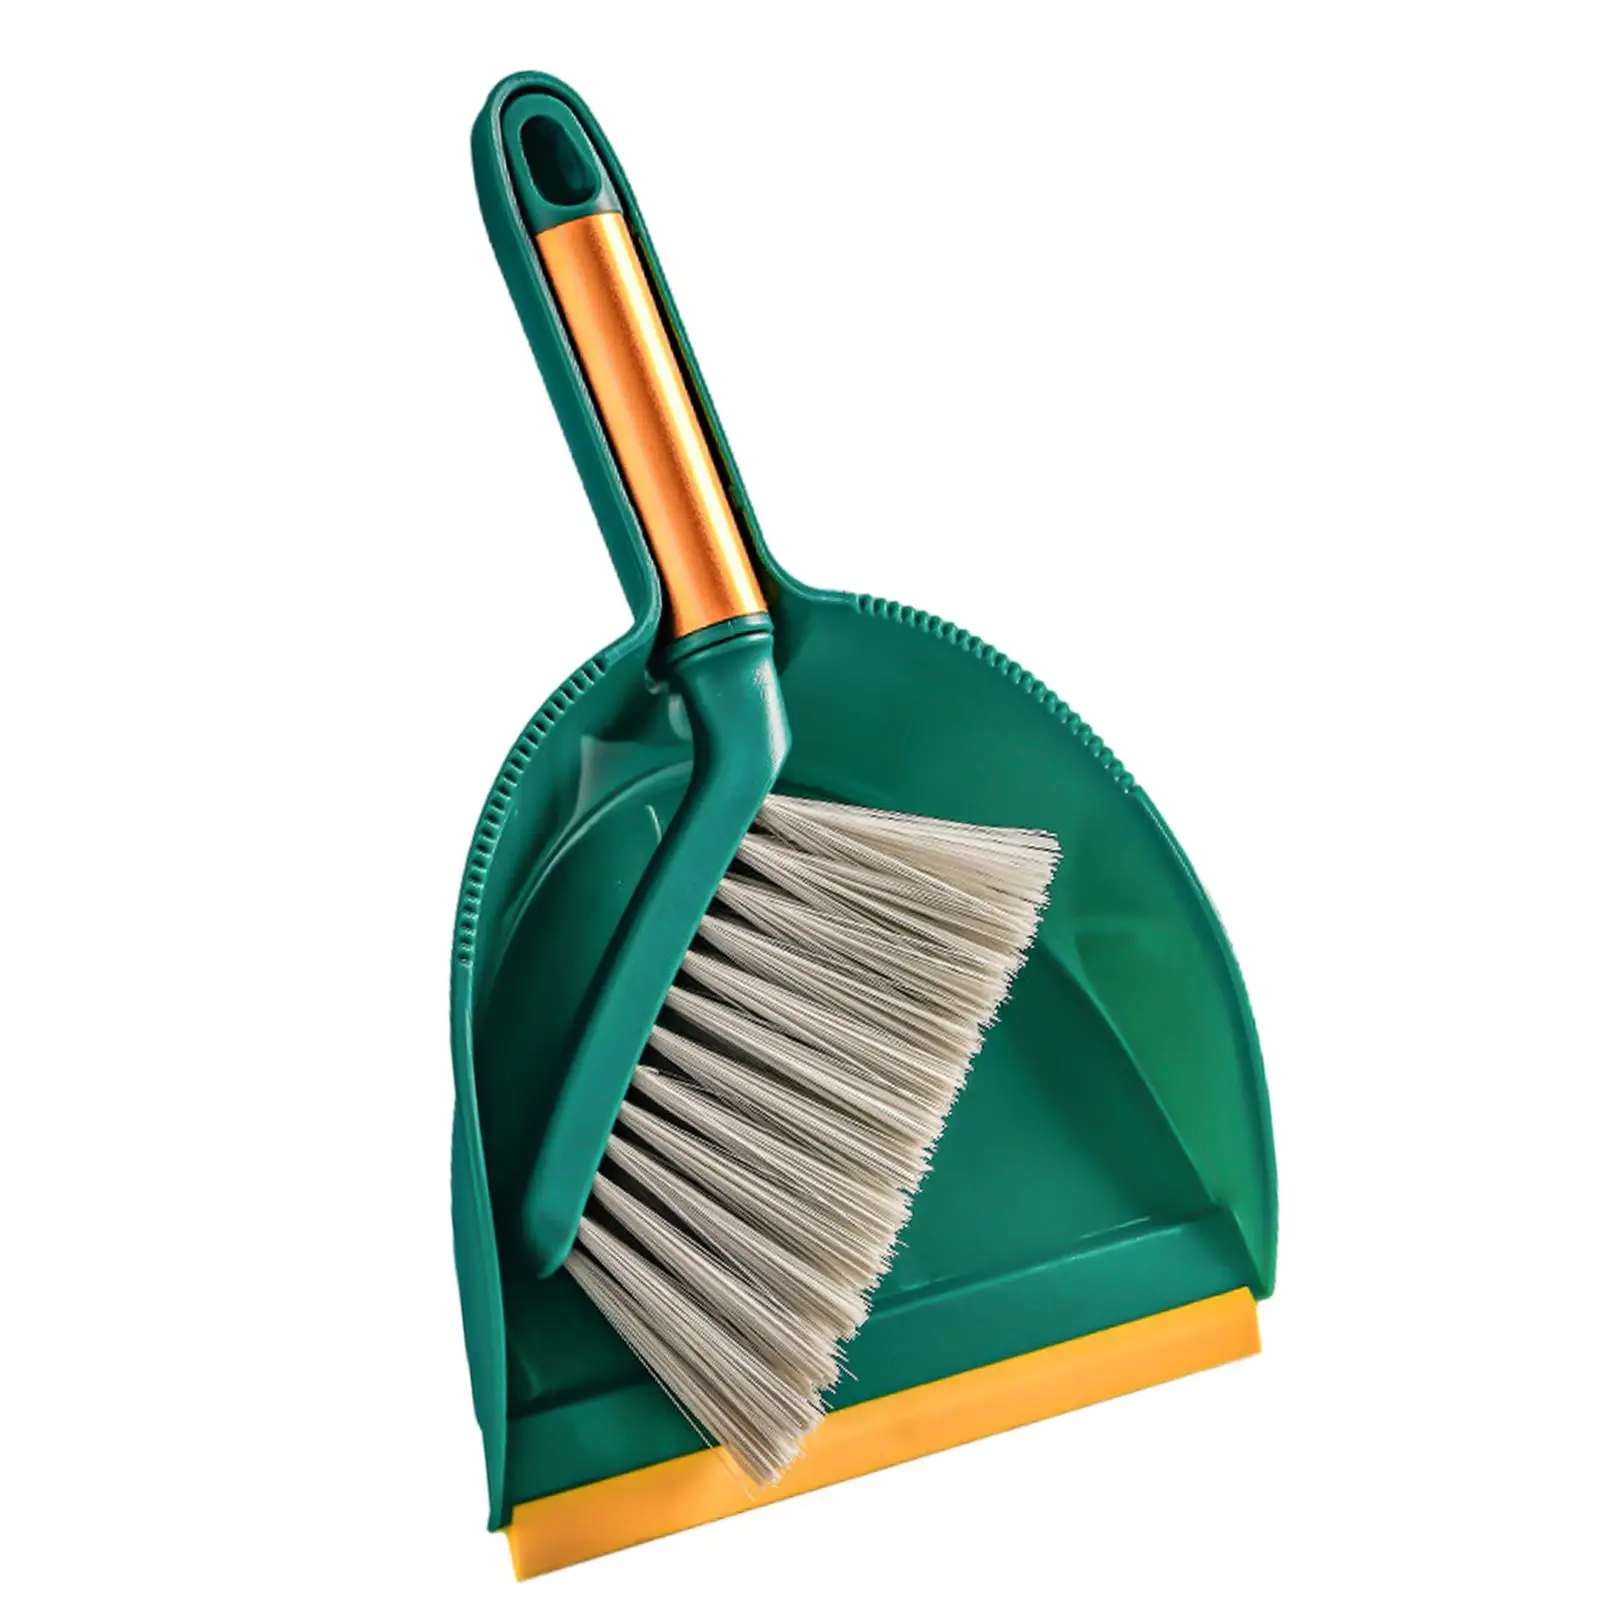 Mini Broom and Dustpan Portable Sweeping Set Desktop Keyboard Sweep Broom Cleaning Brush for Car Desk Keyboard Table